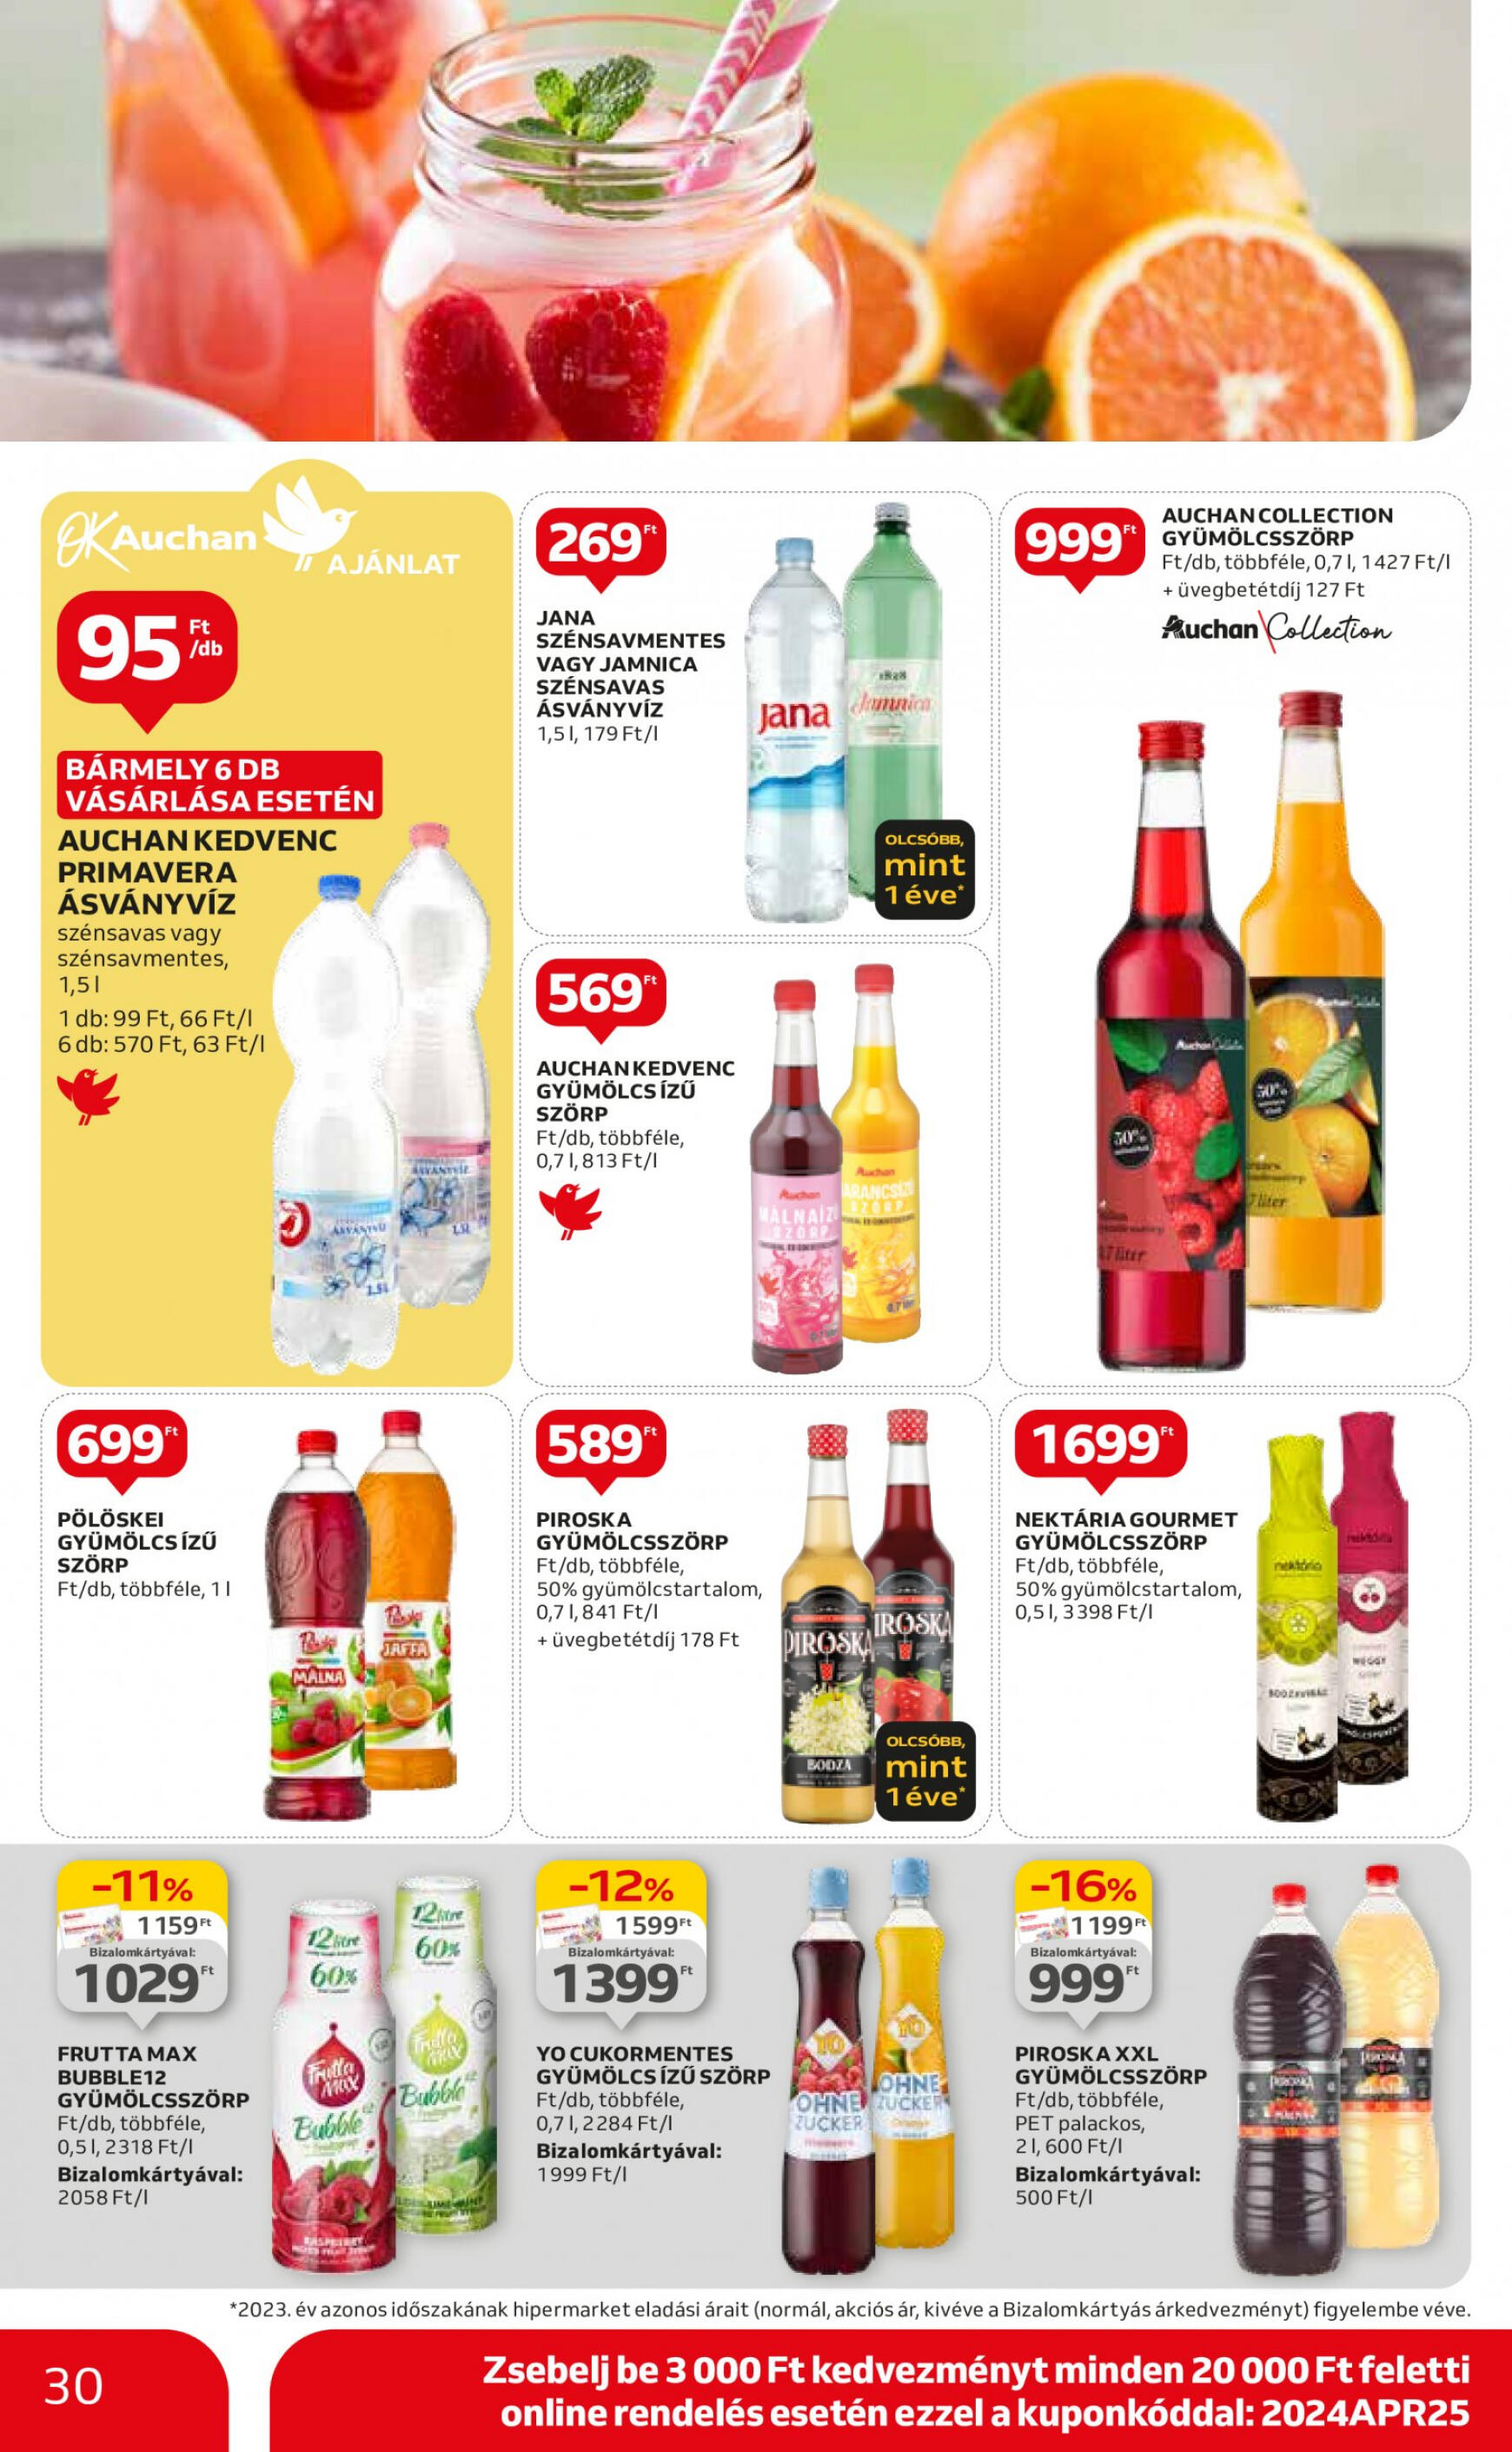 auchan - Aktuális újság Auchan 04.25. - 04.30. - page: 30